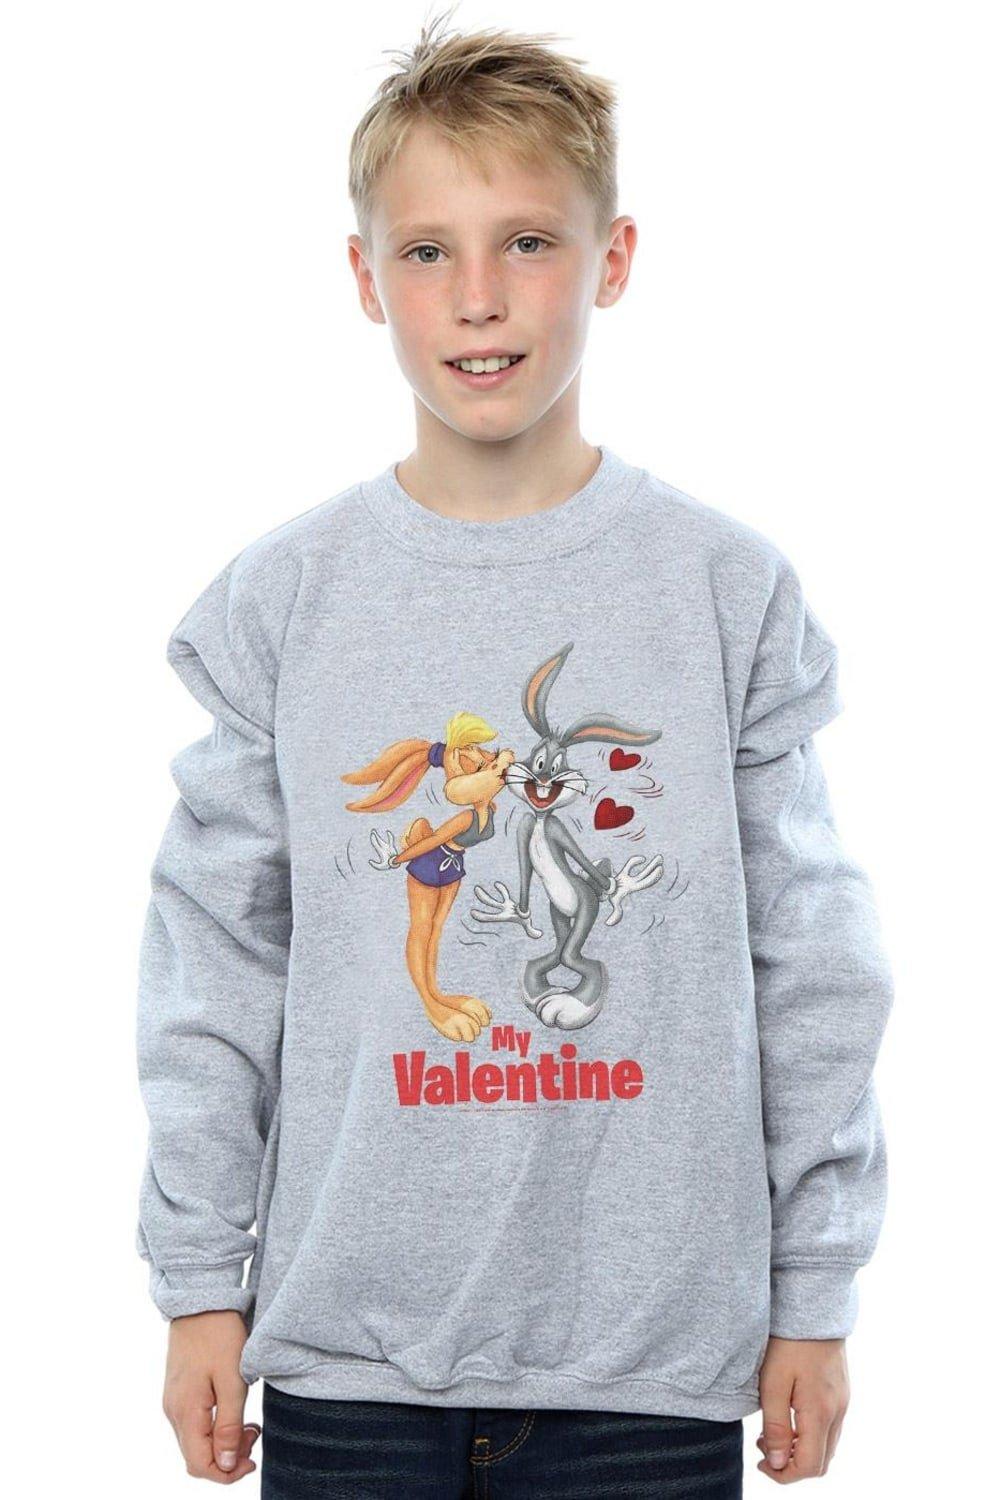 Bugs Bunny And Lola Valentine’s Day Sweatshirt